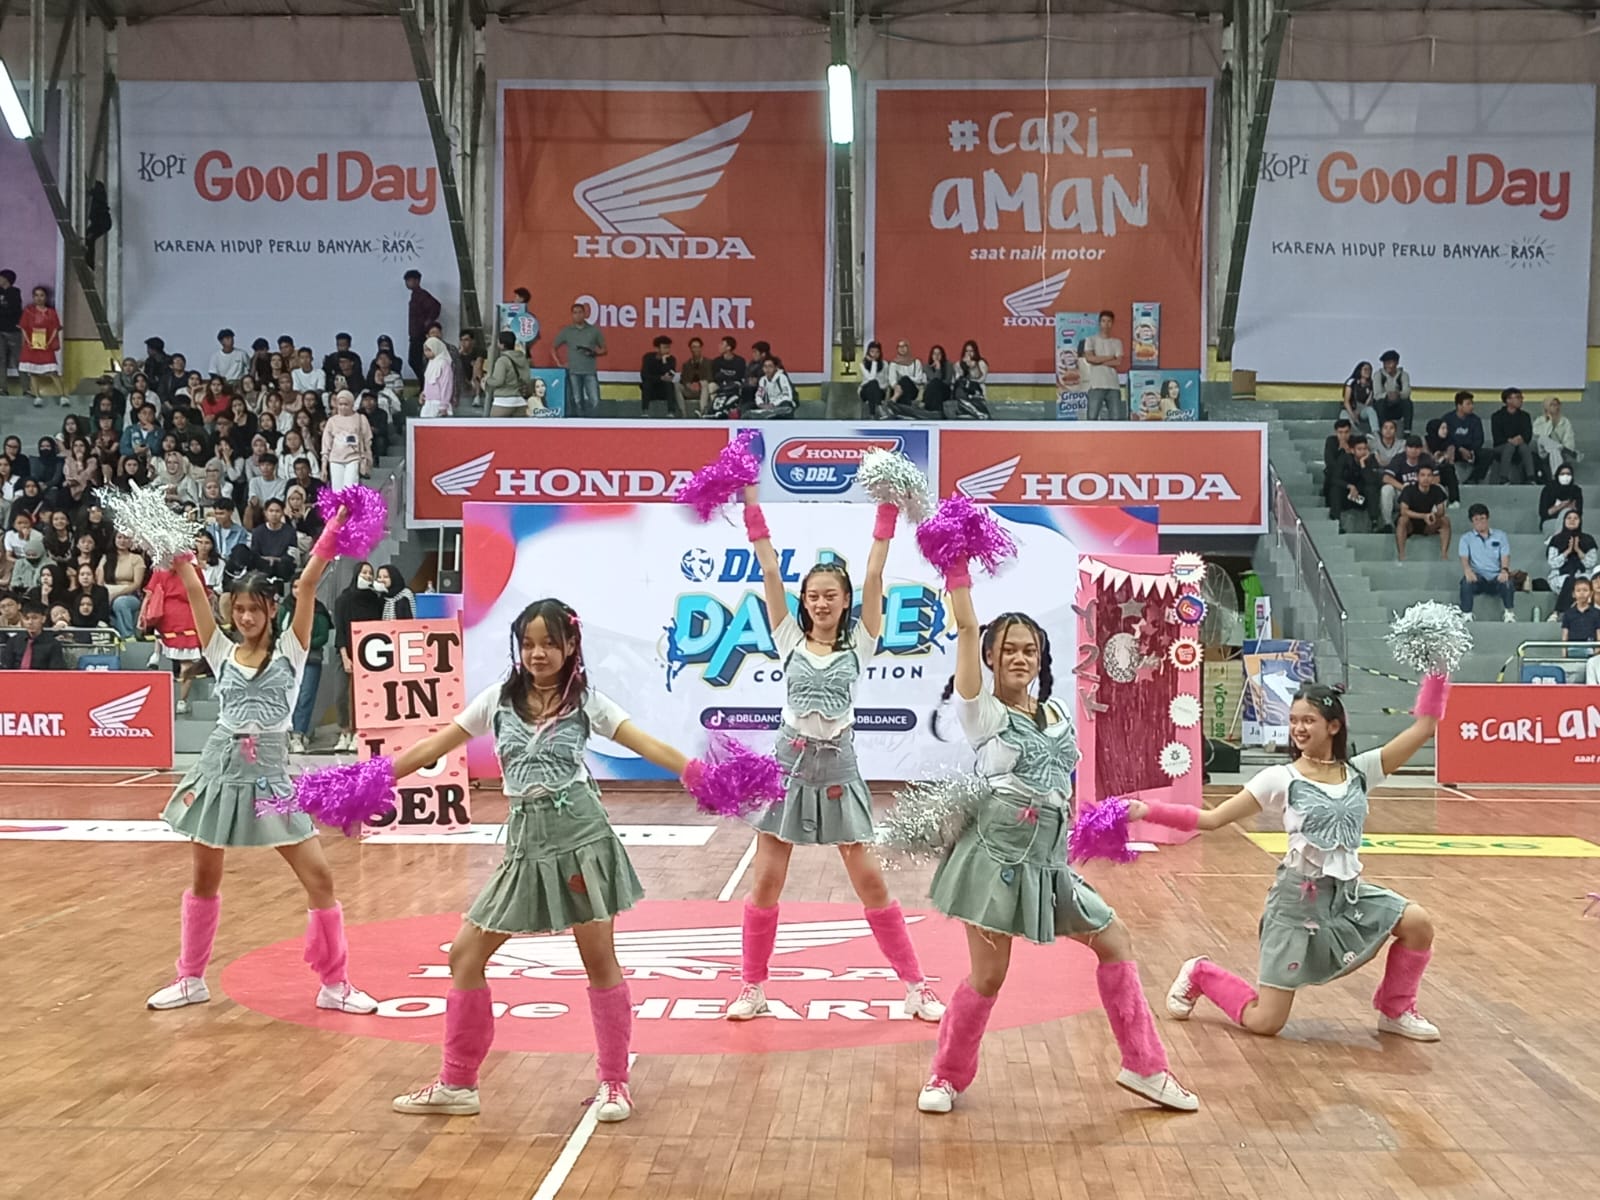 Usung Konsep Cheerleader, SMAN 1 Kota Bandung Sukses Bawakan Tema FYP